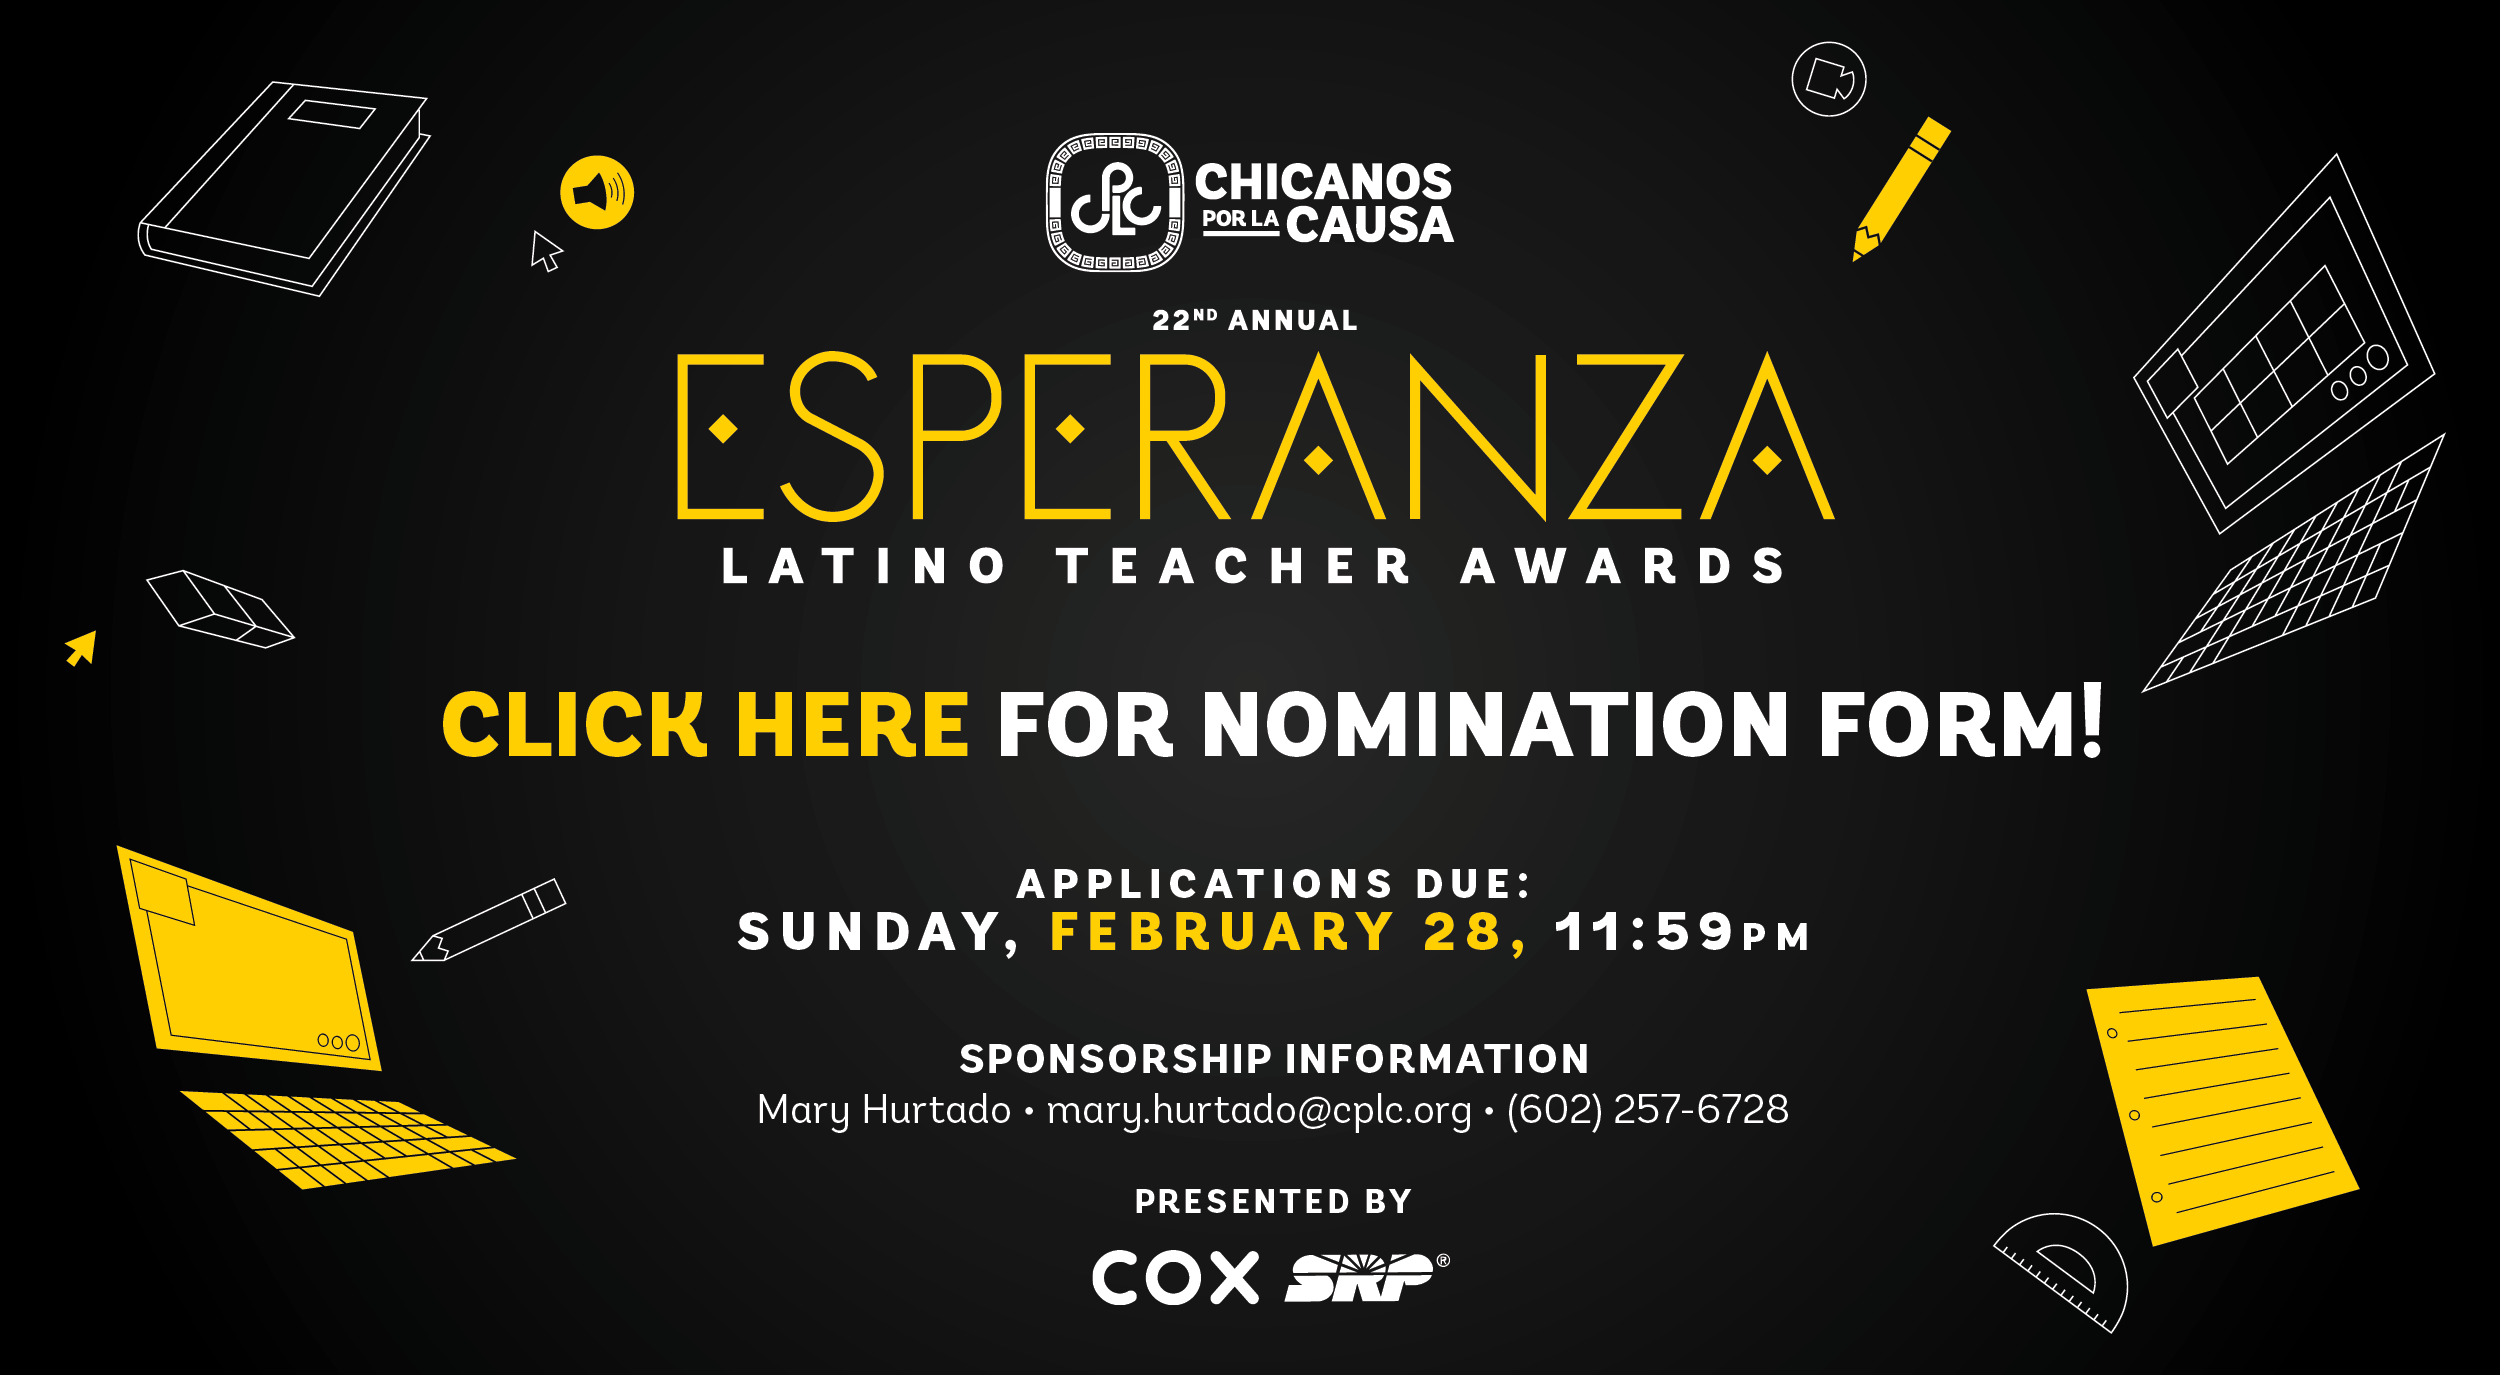 Esperanza Latino Teacher Awards Nomination Graphic--Click here for nomination form. Due February 28, 2021 at 11:59pm